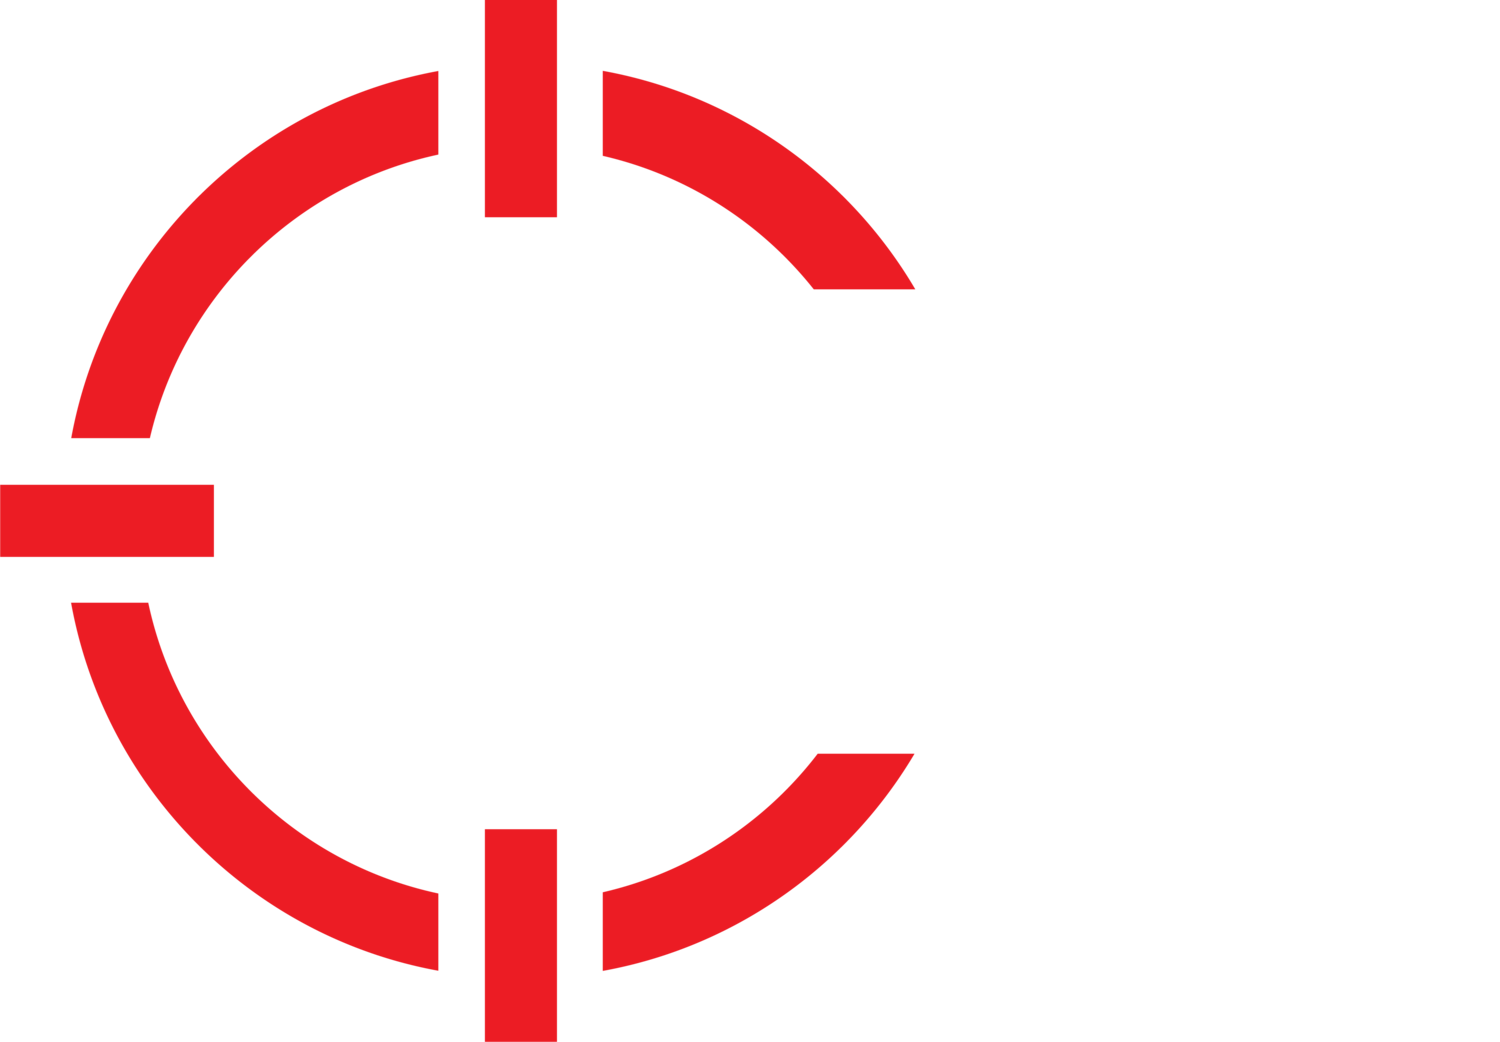 www.mtactraining.com